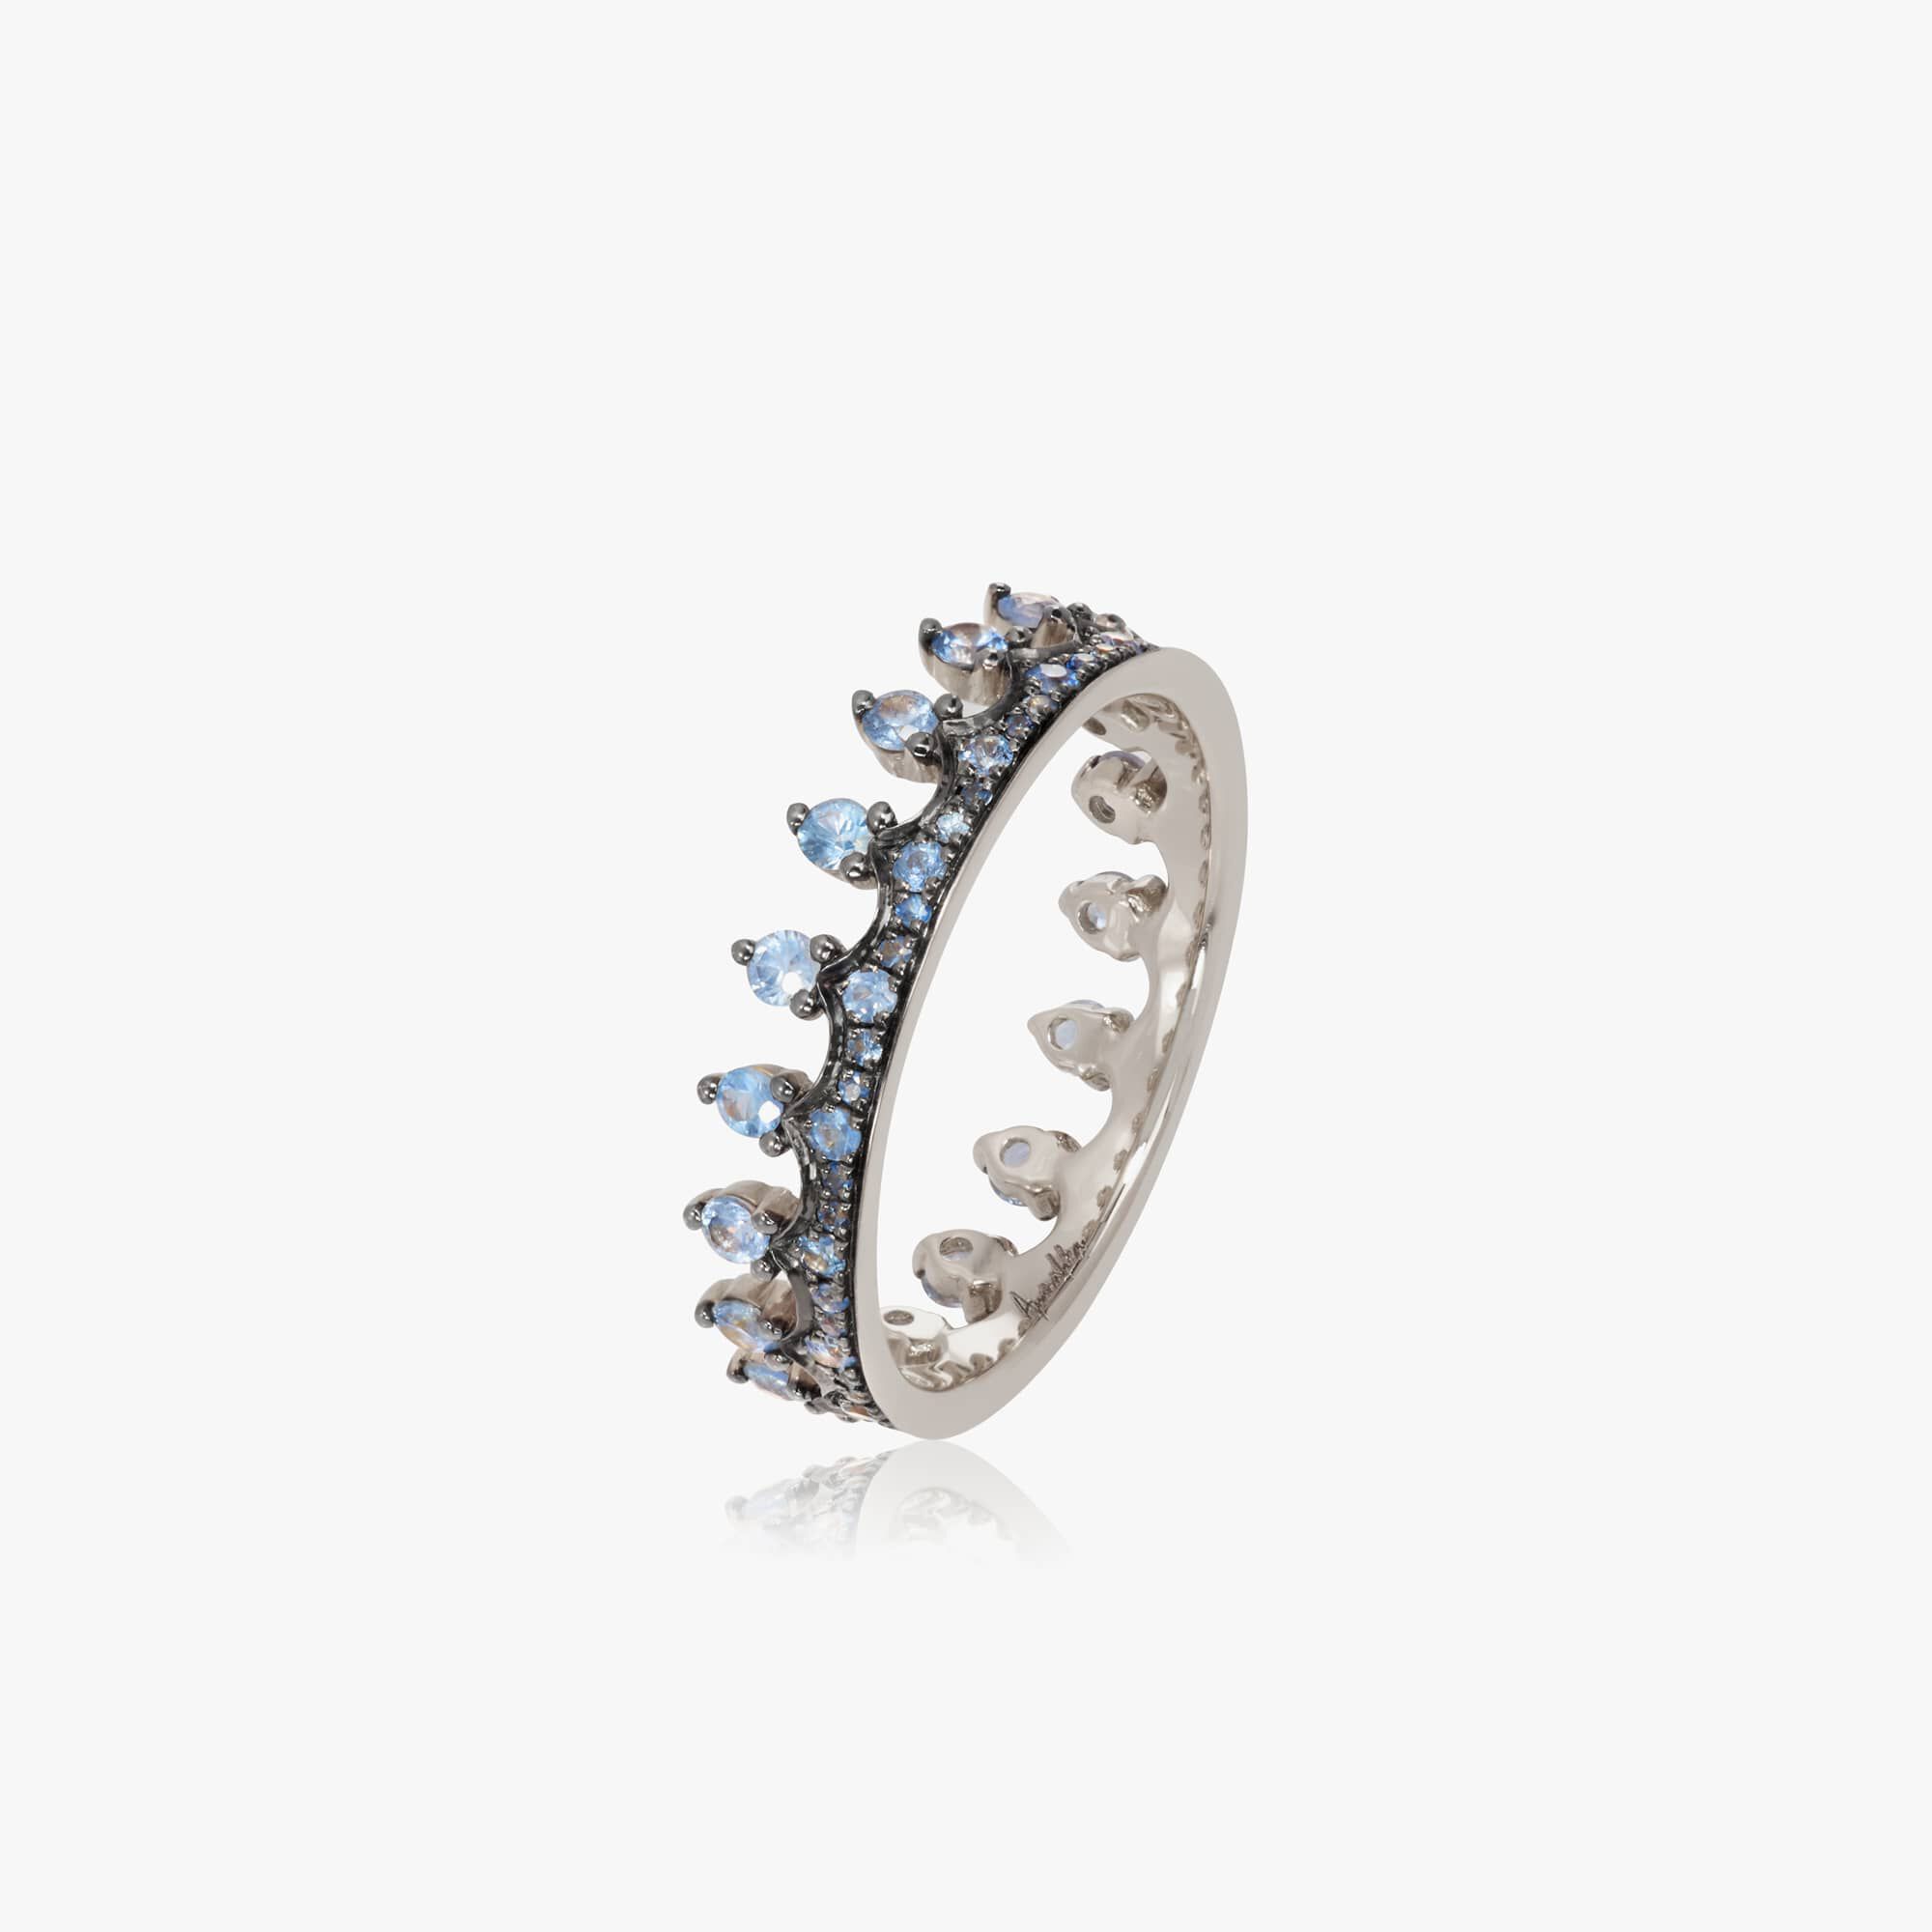 18ct White Gold Sapphire Ring | canoeracing.org.uk